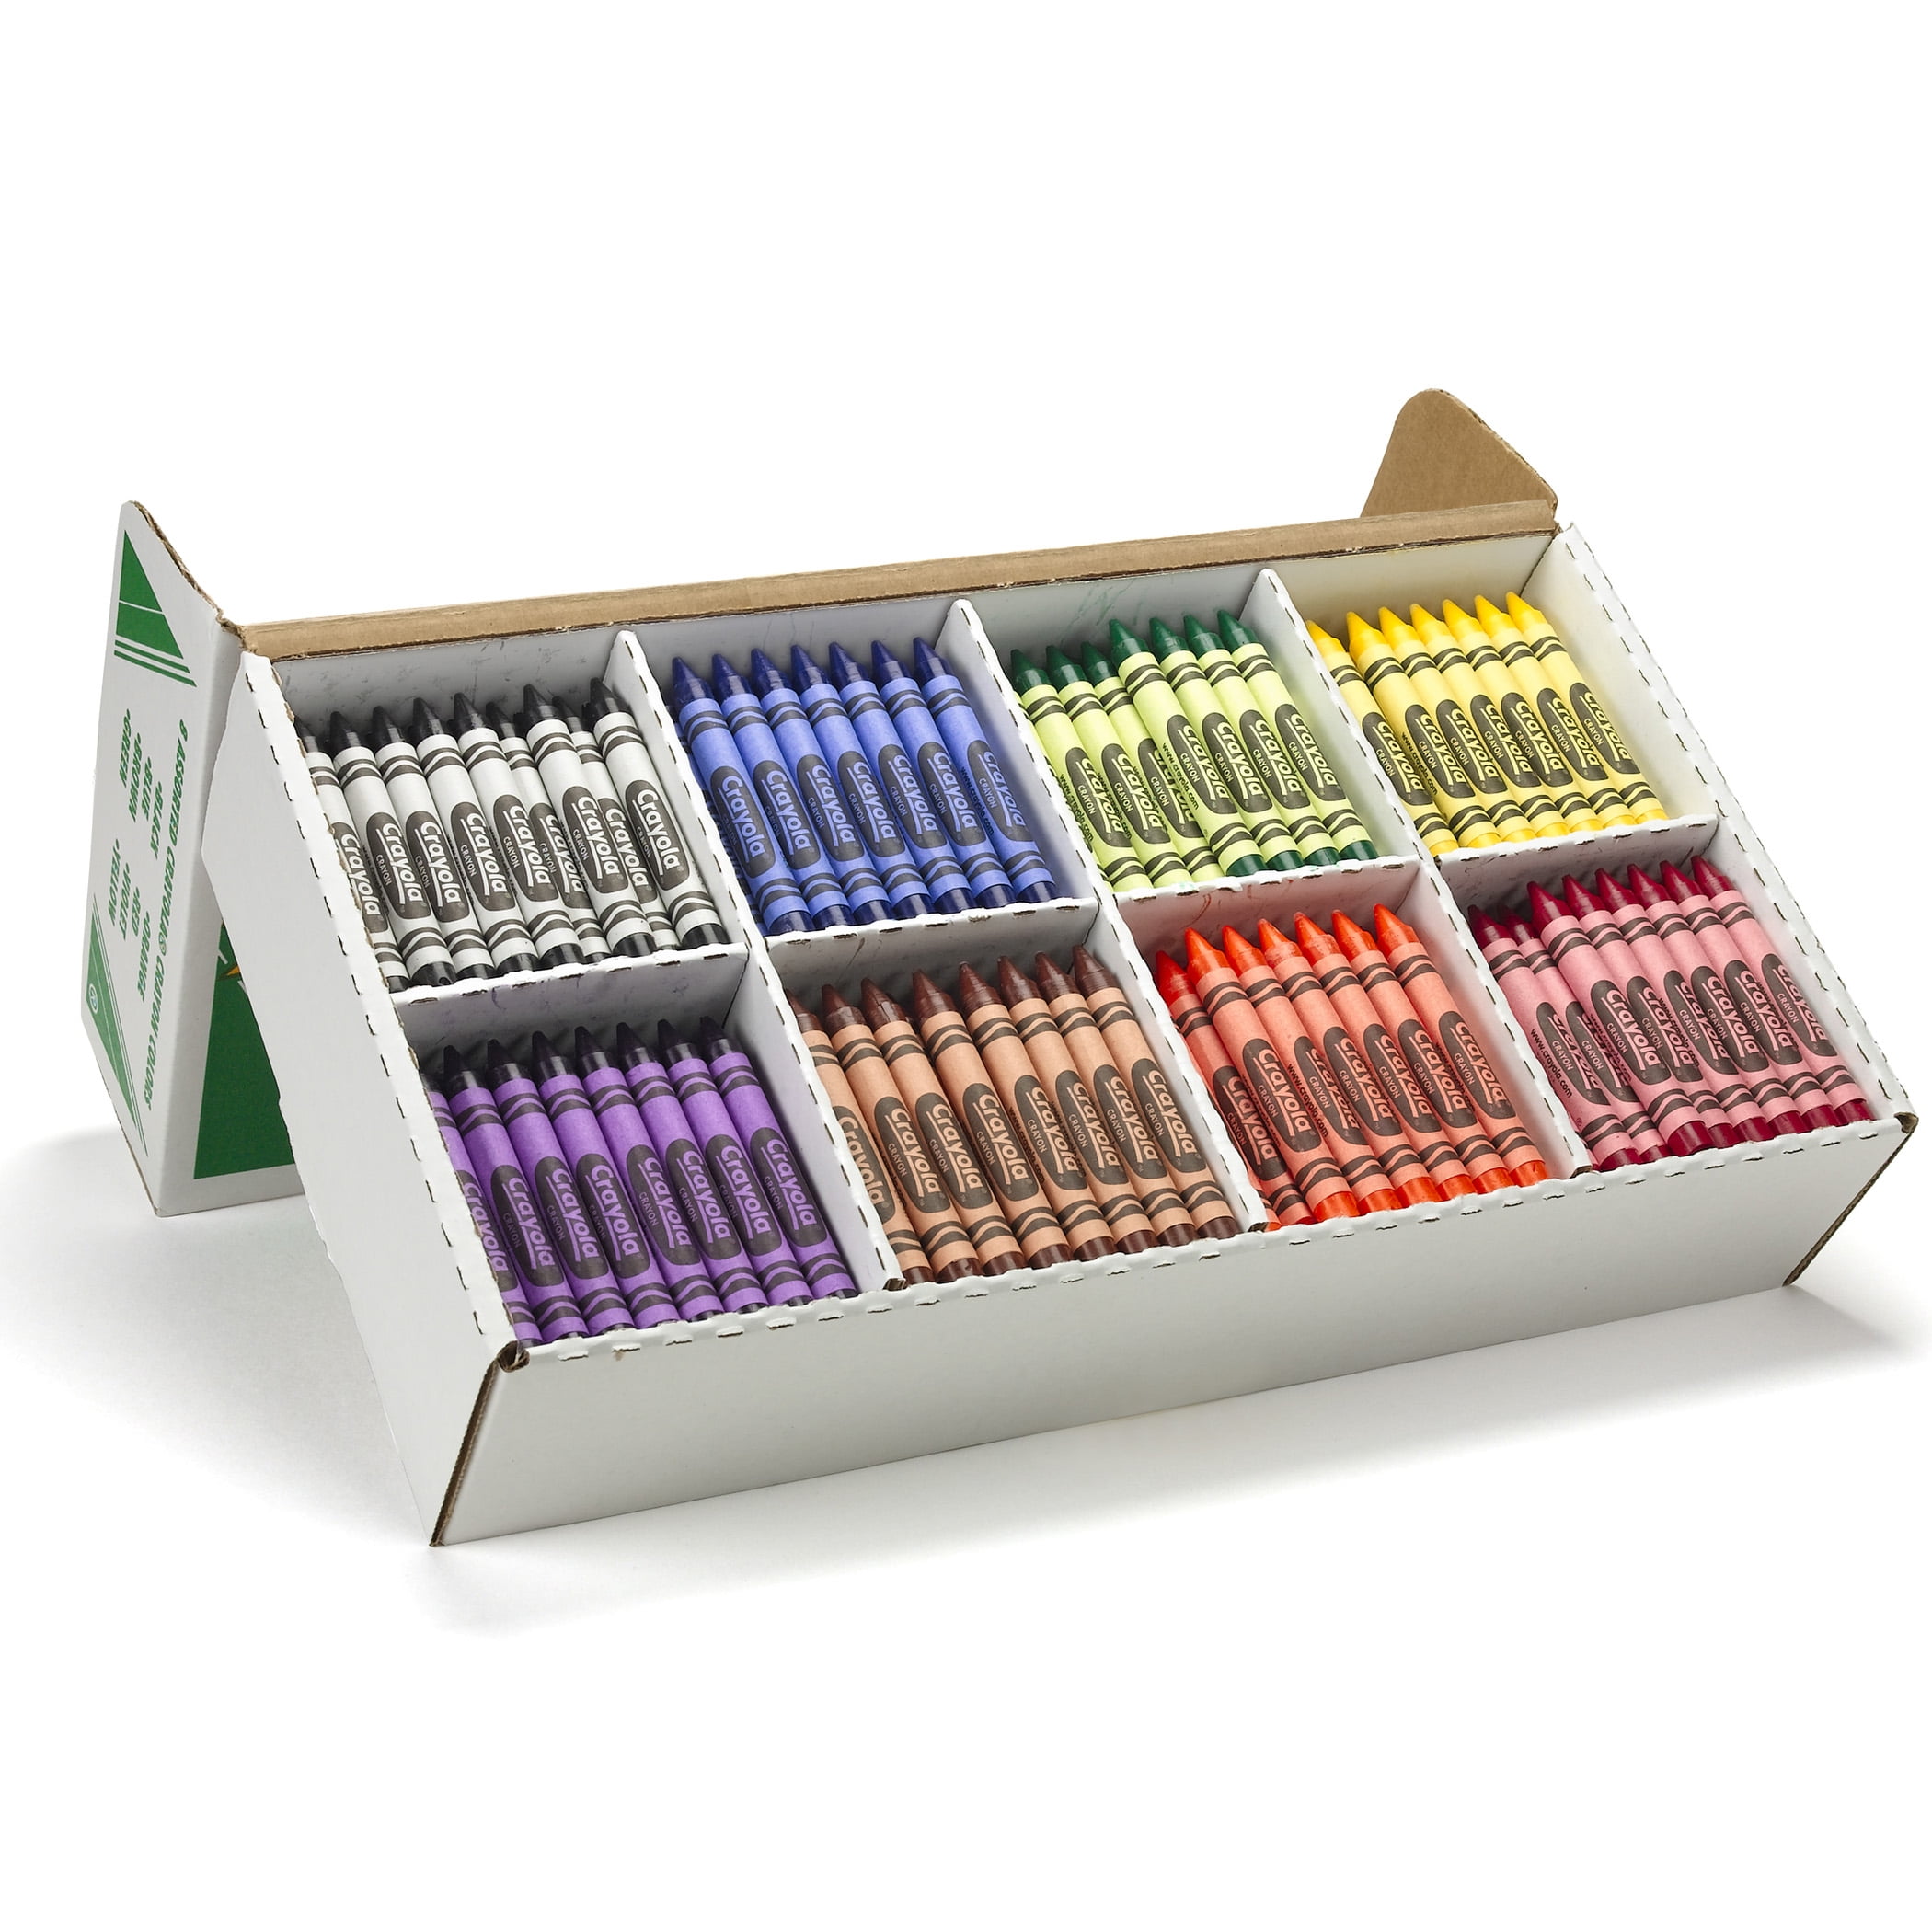 Crayola® Classic Color Crayon Pack, 8 ct - Ralphs